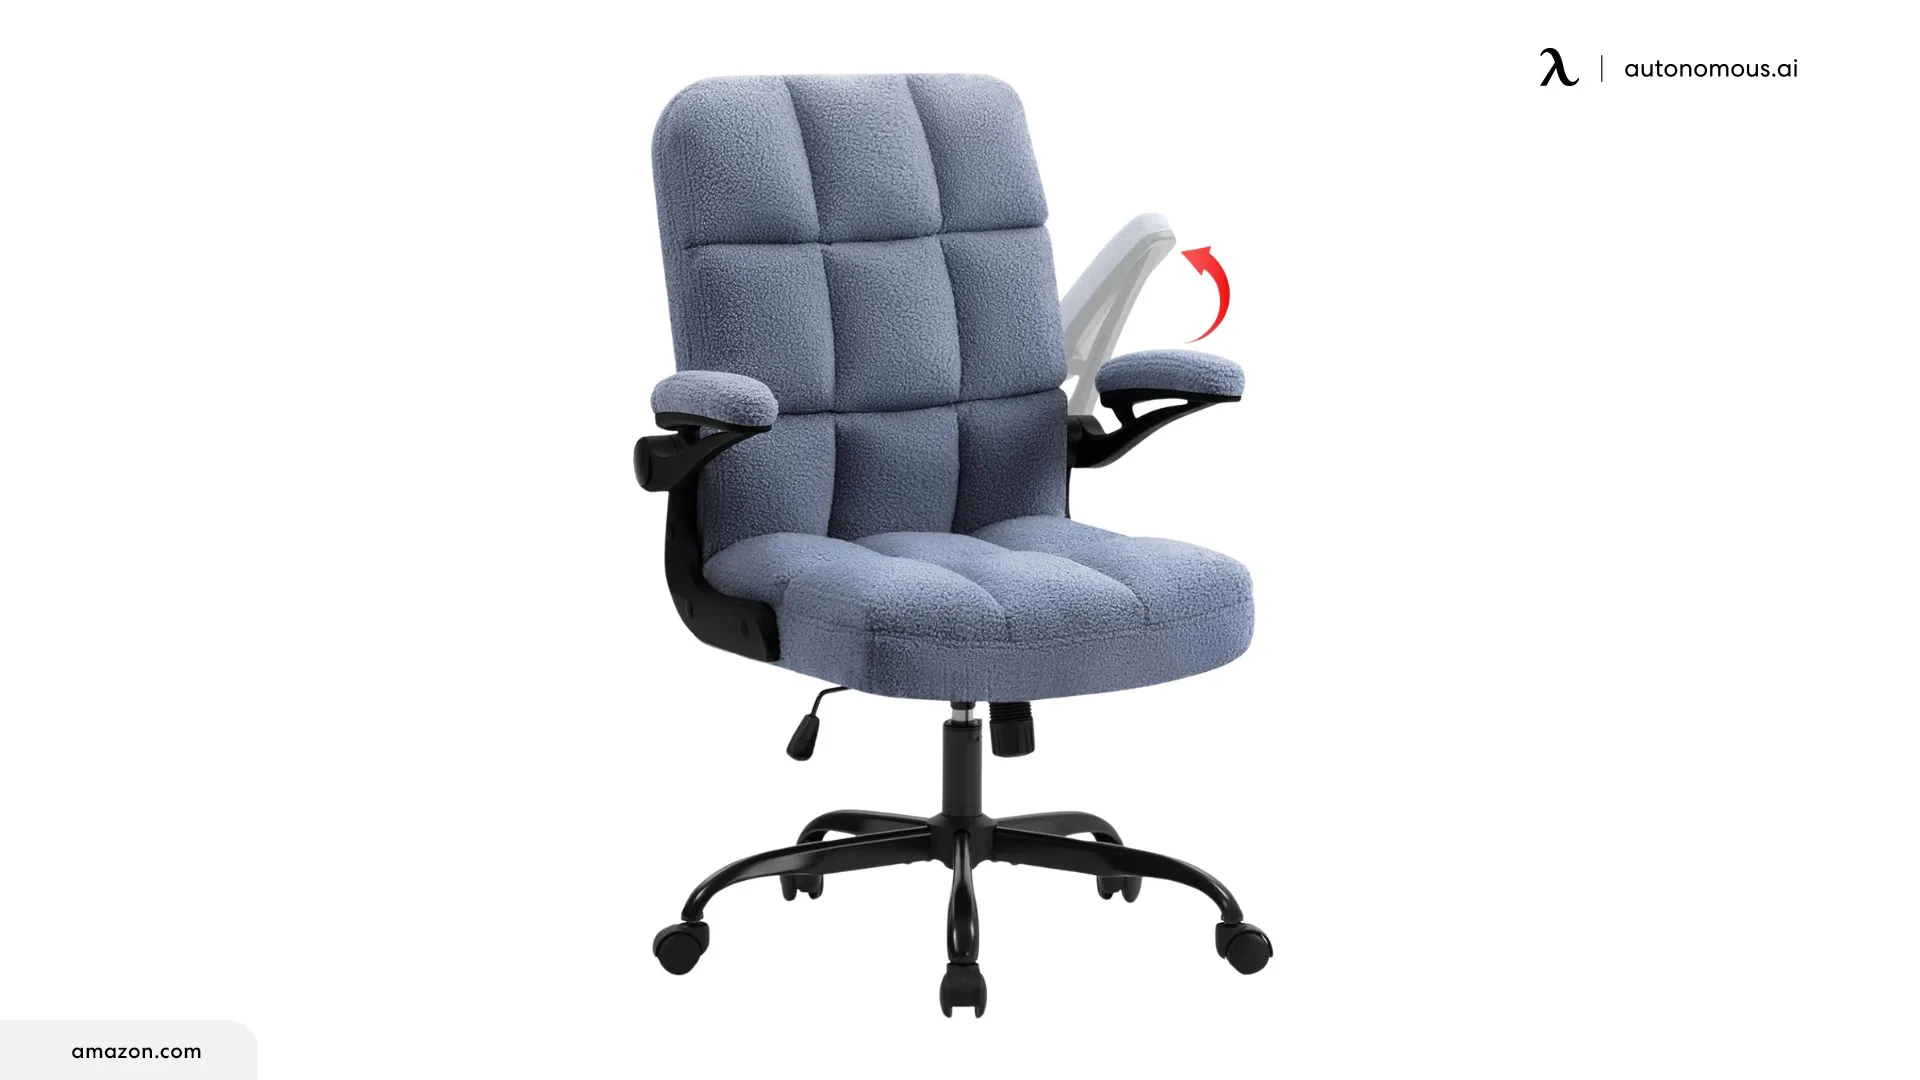 SEATZONE Executive Office Chair